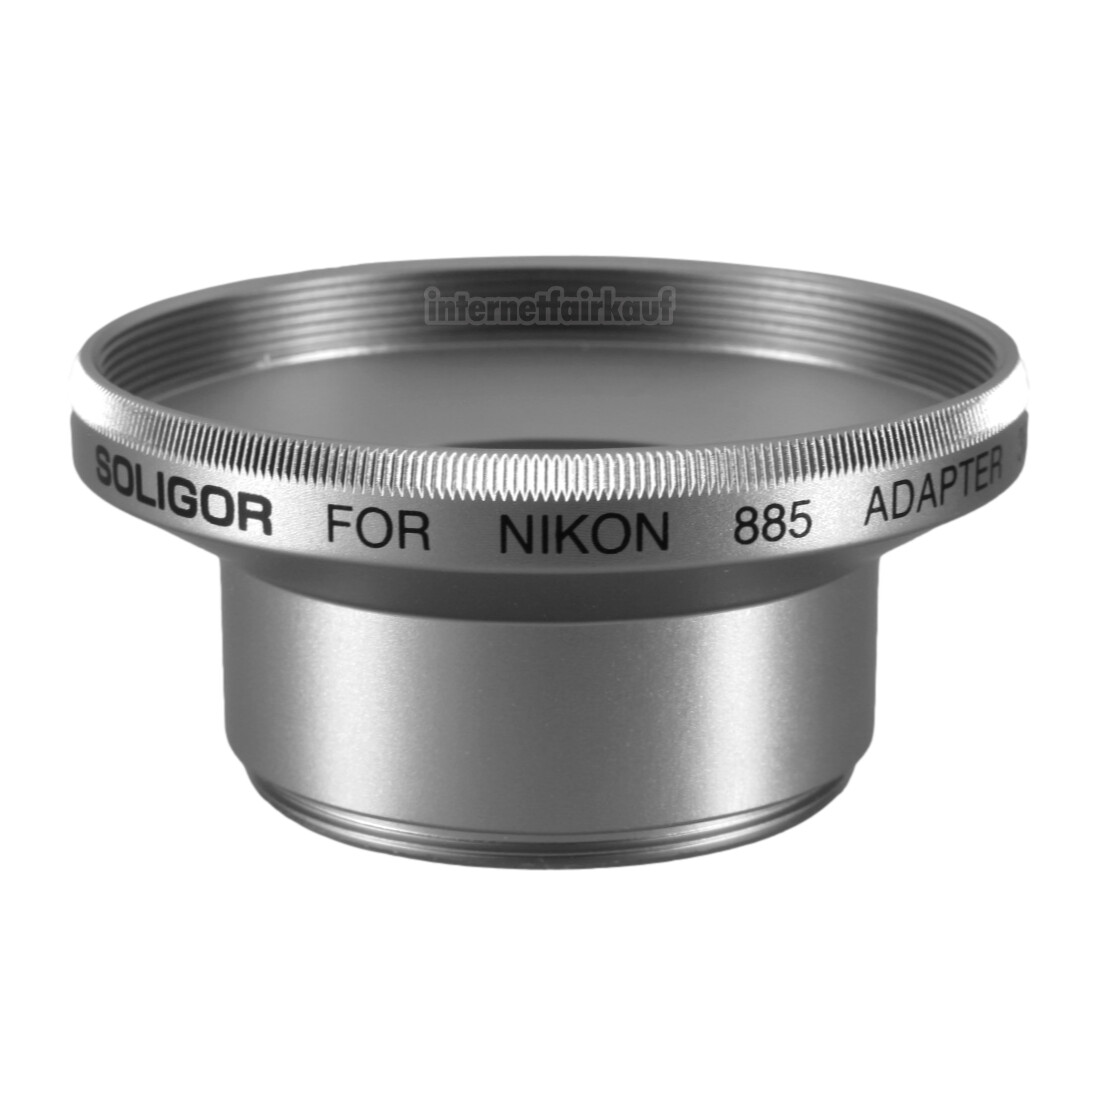 Adapter Tubus für Nikon Coolpix 885 4300